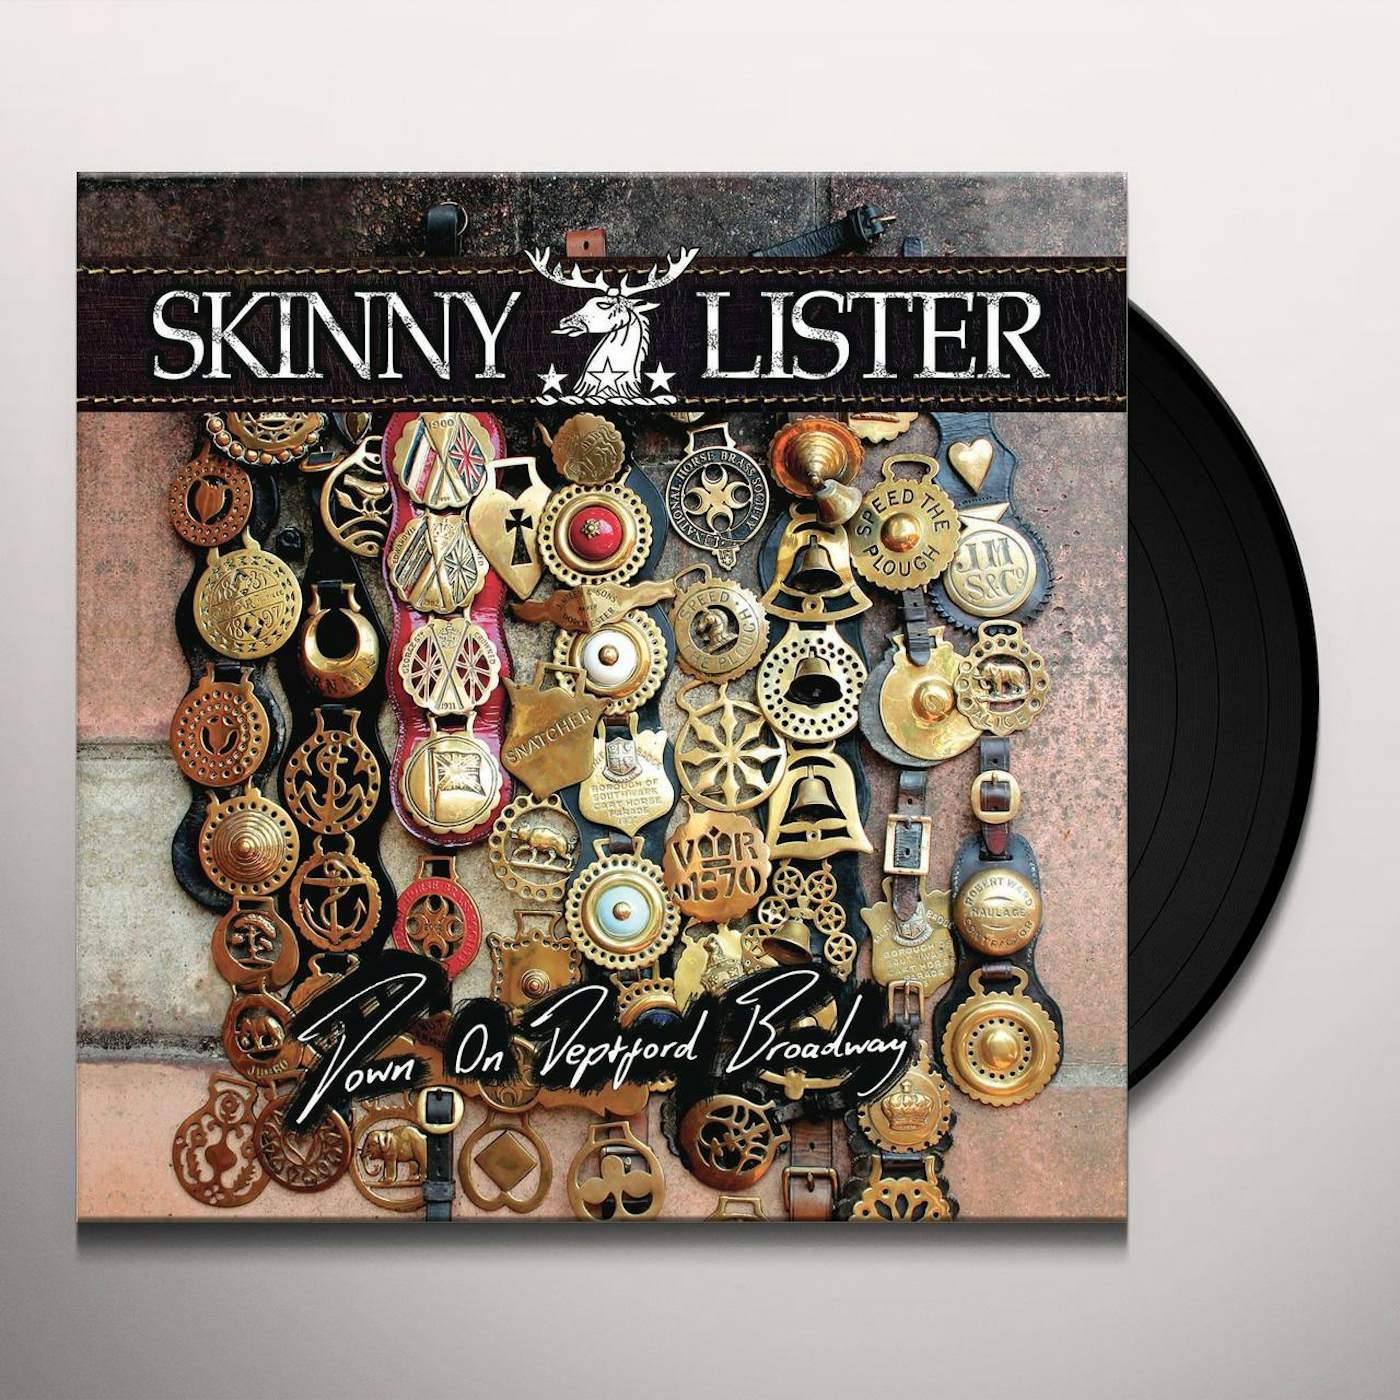 Skinny Lister Down On Deptford Broadway Vinyl Record